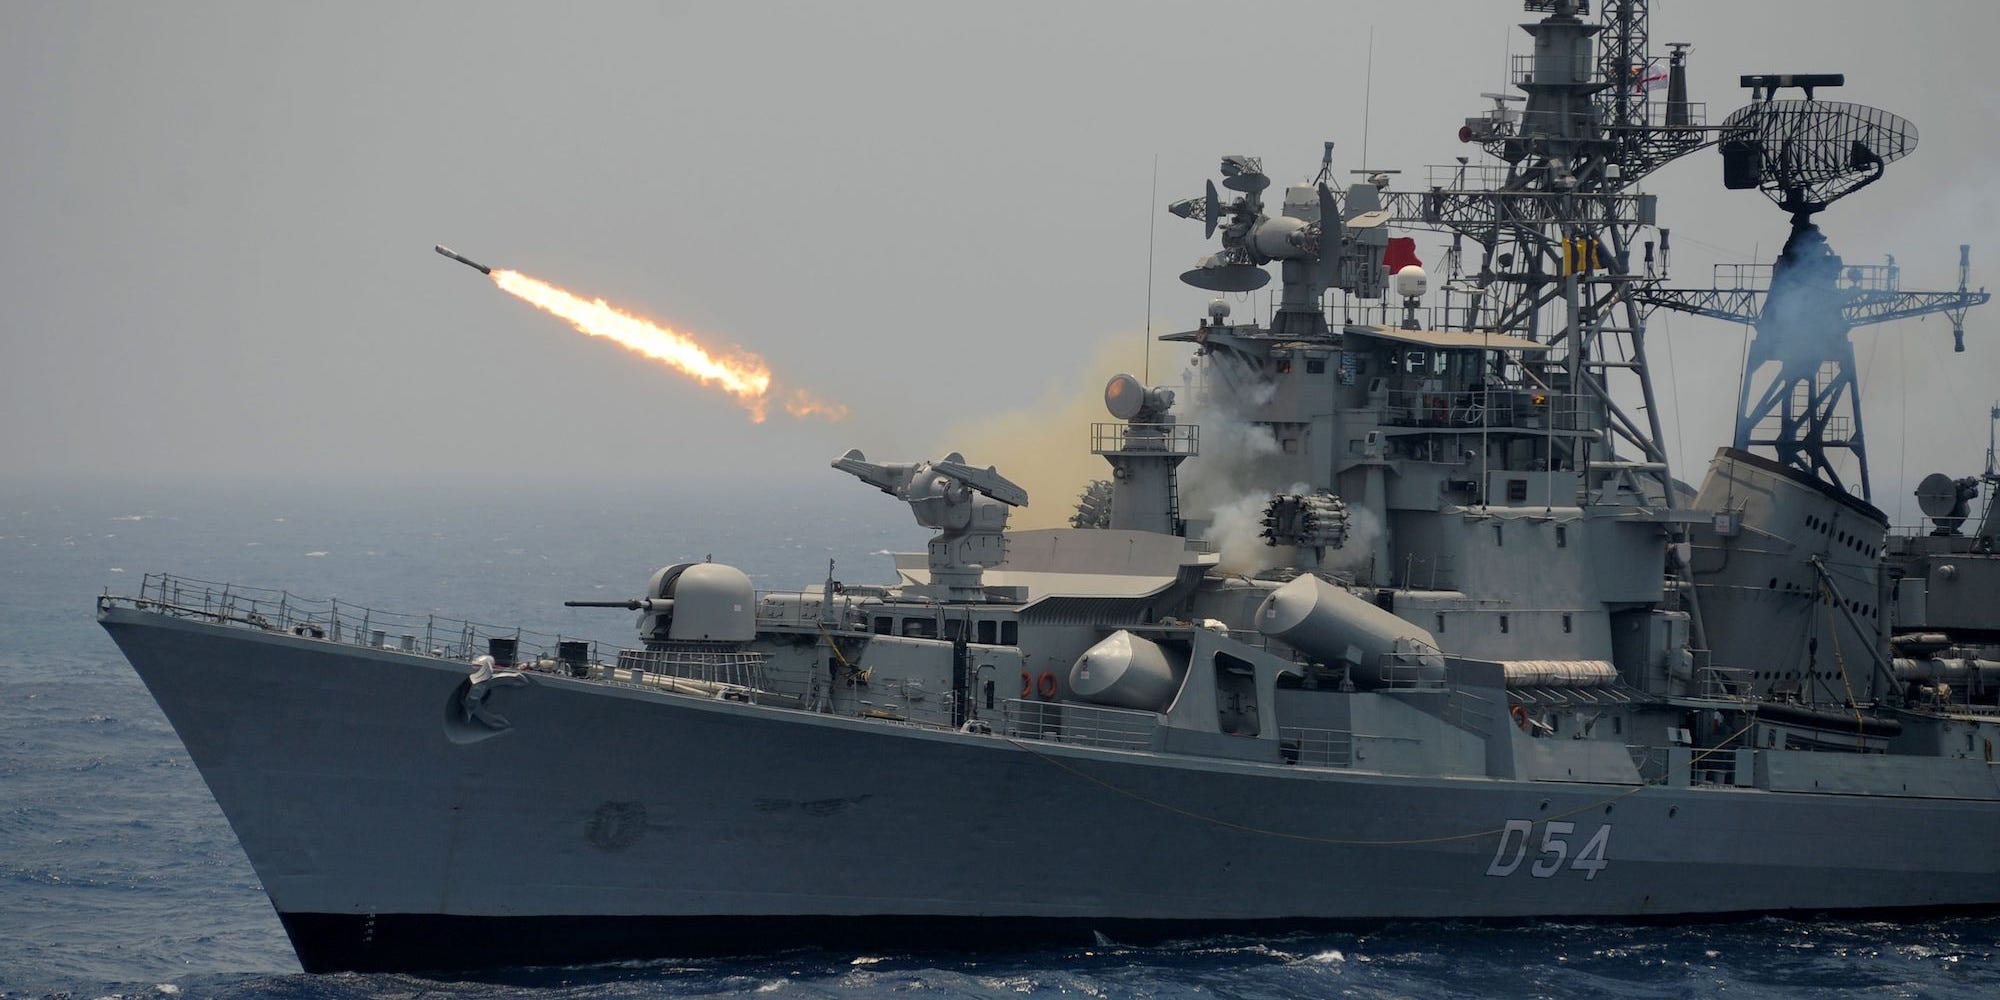 Indian navy destroyer Ranvir